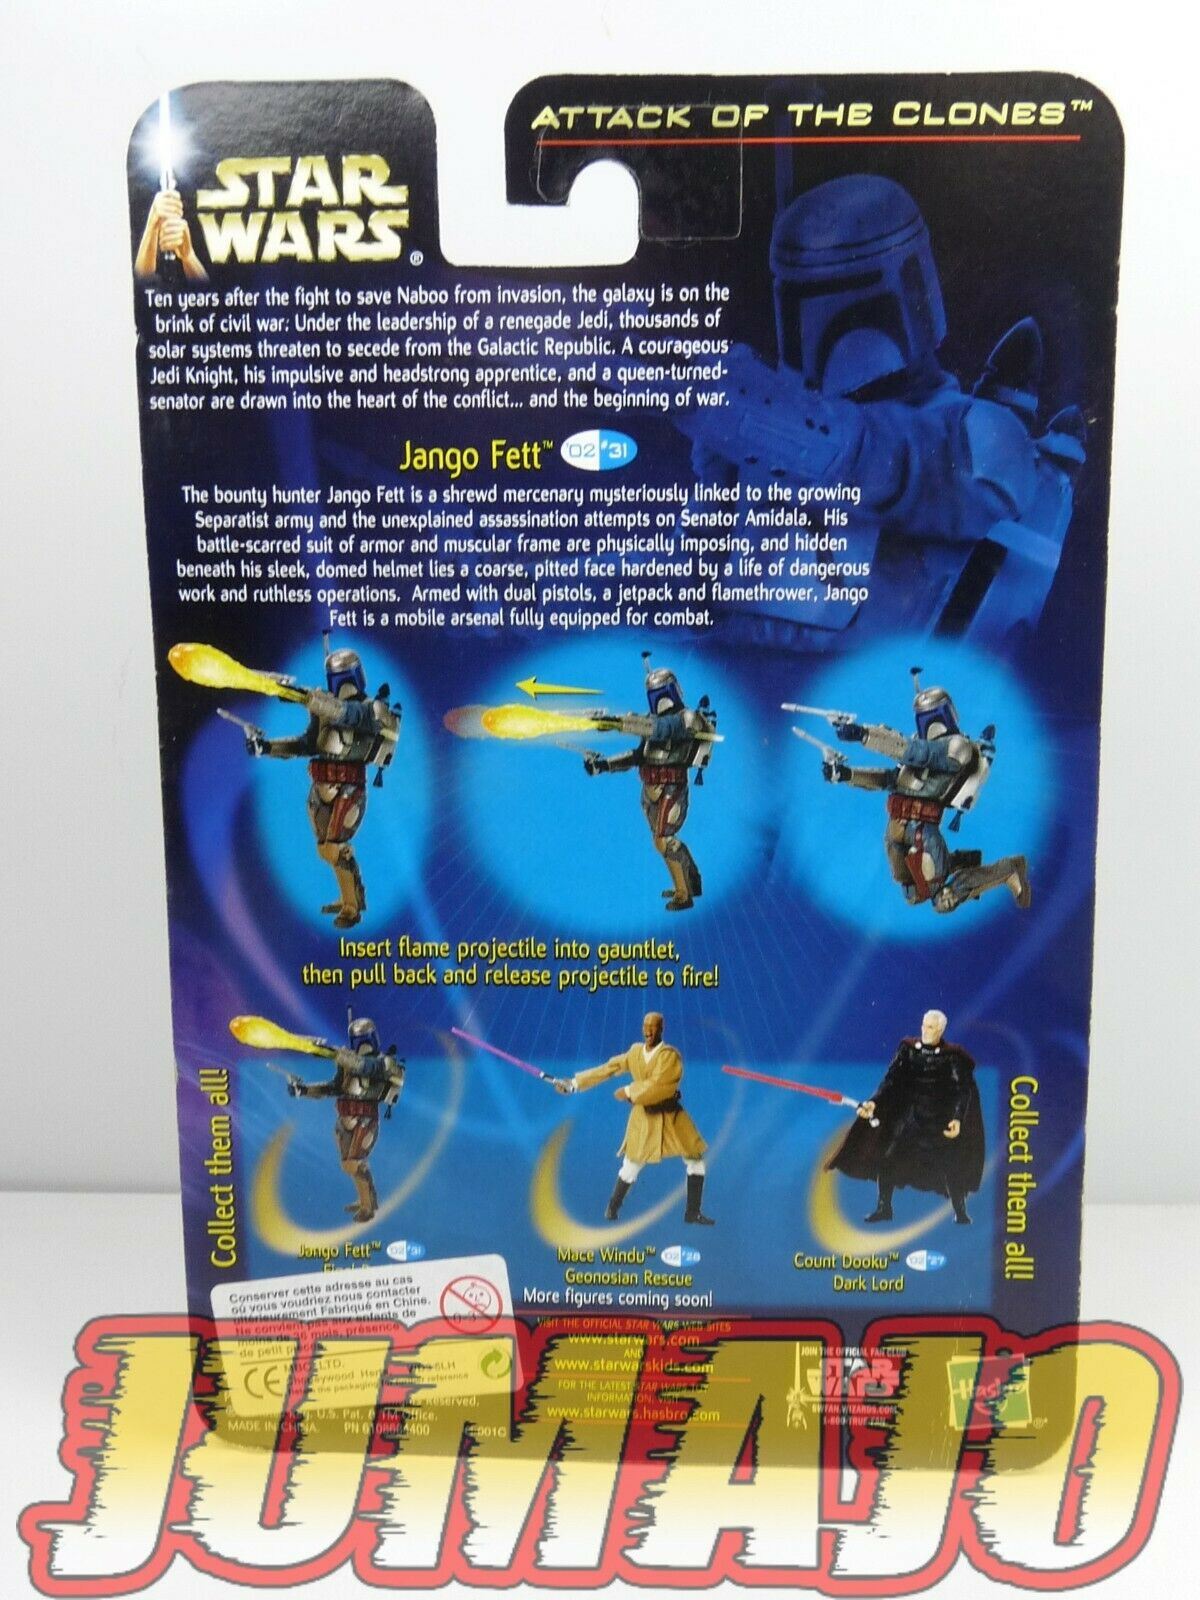 BLI22 figurine STAR WARS AOTC Attack of the clones Jango FETT Final battle